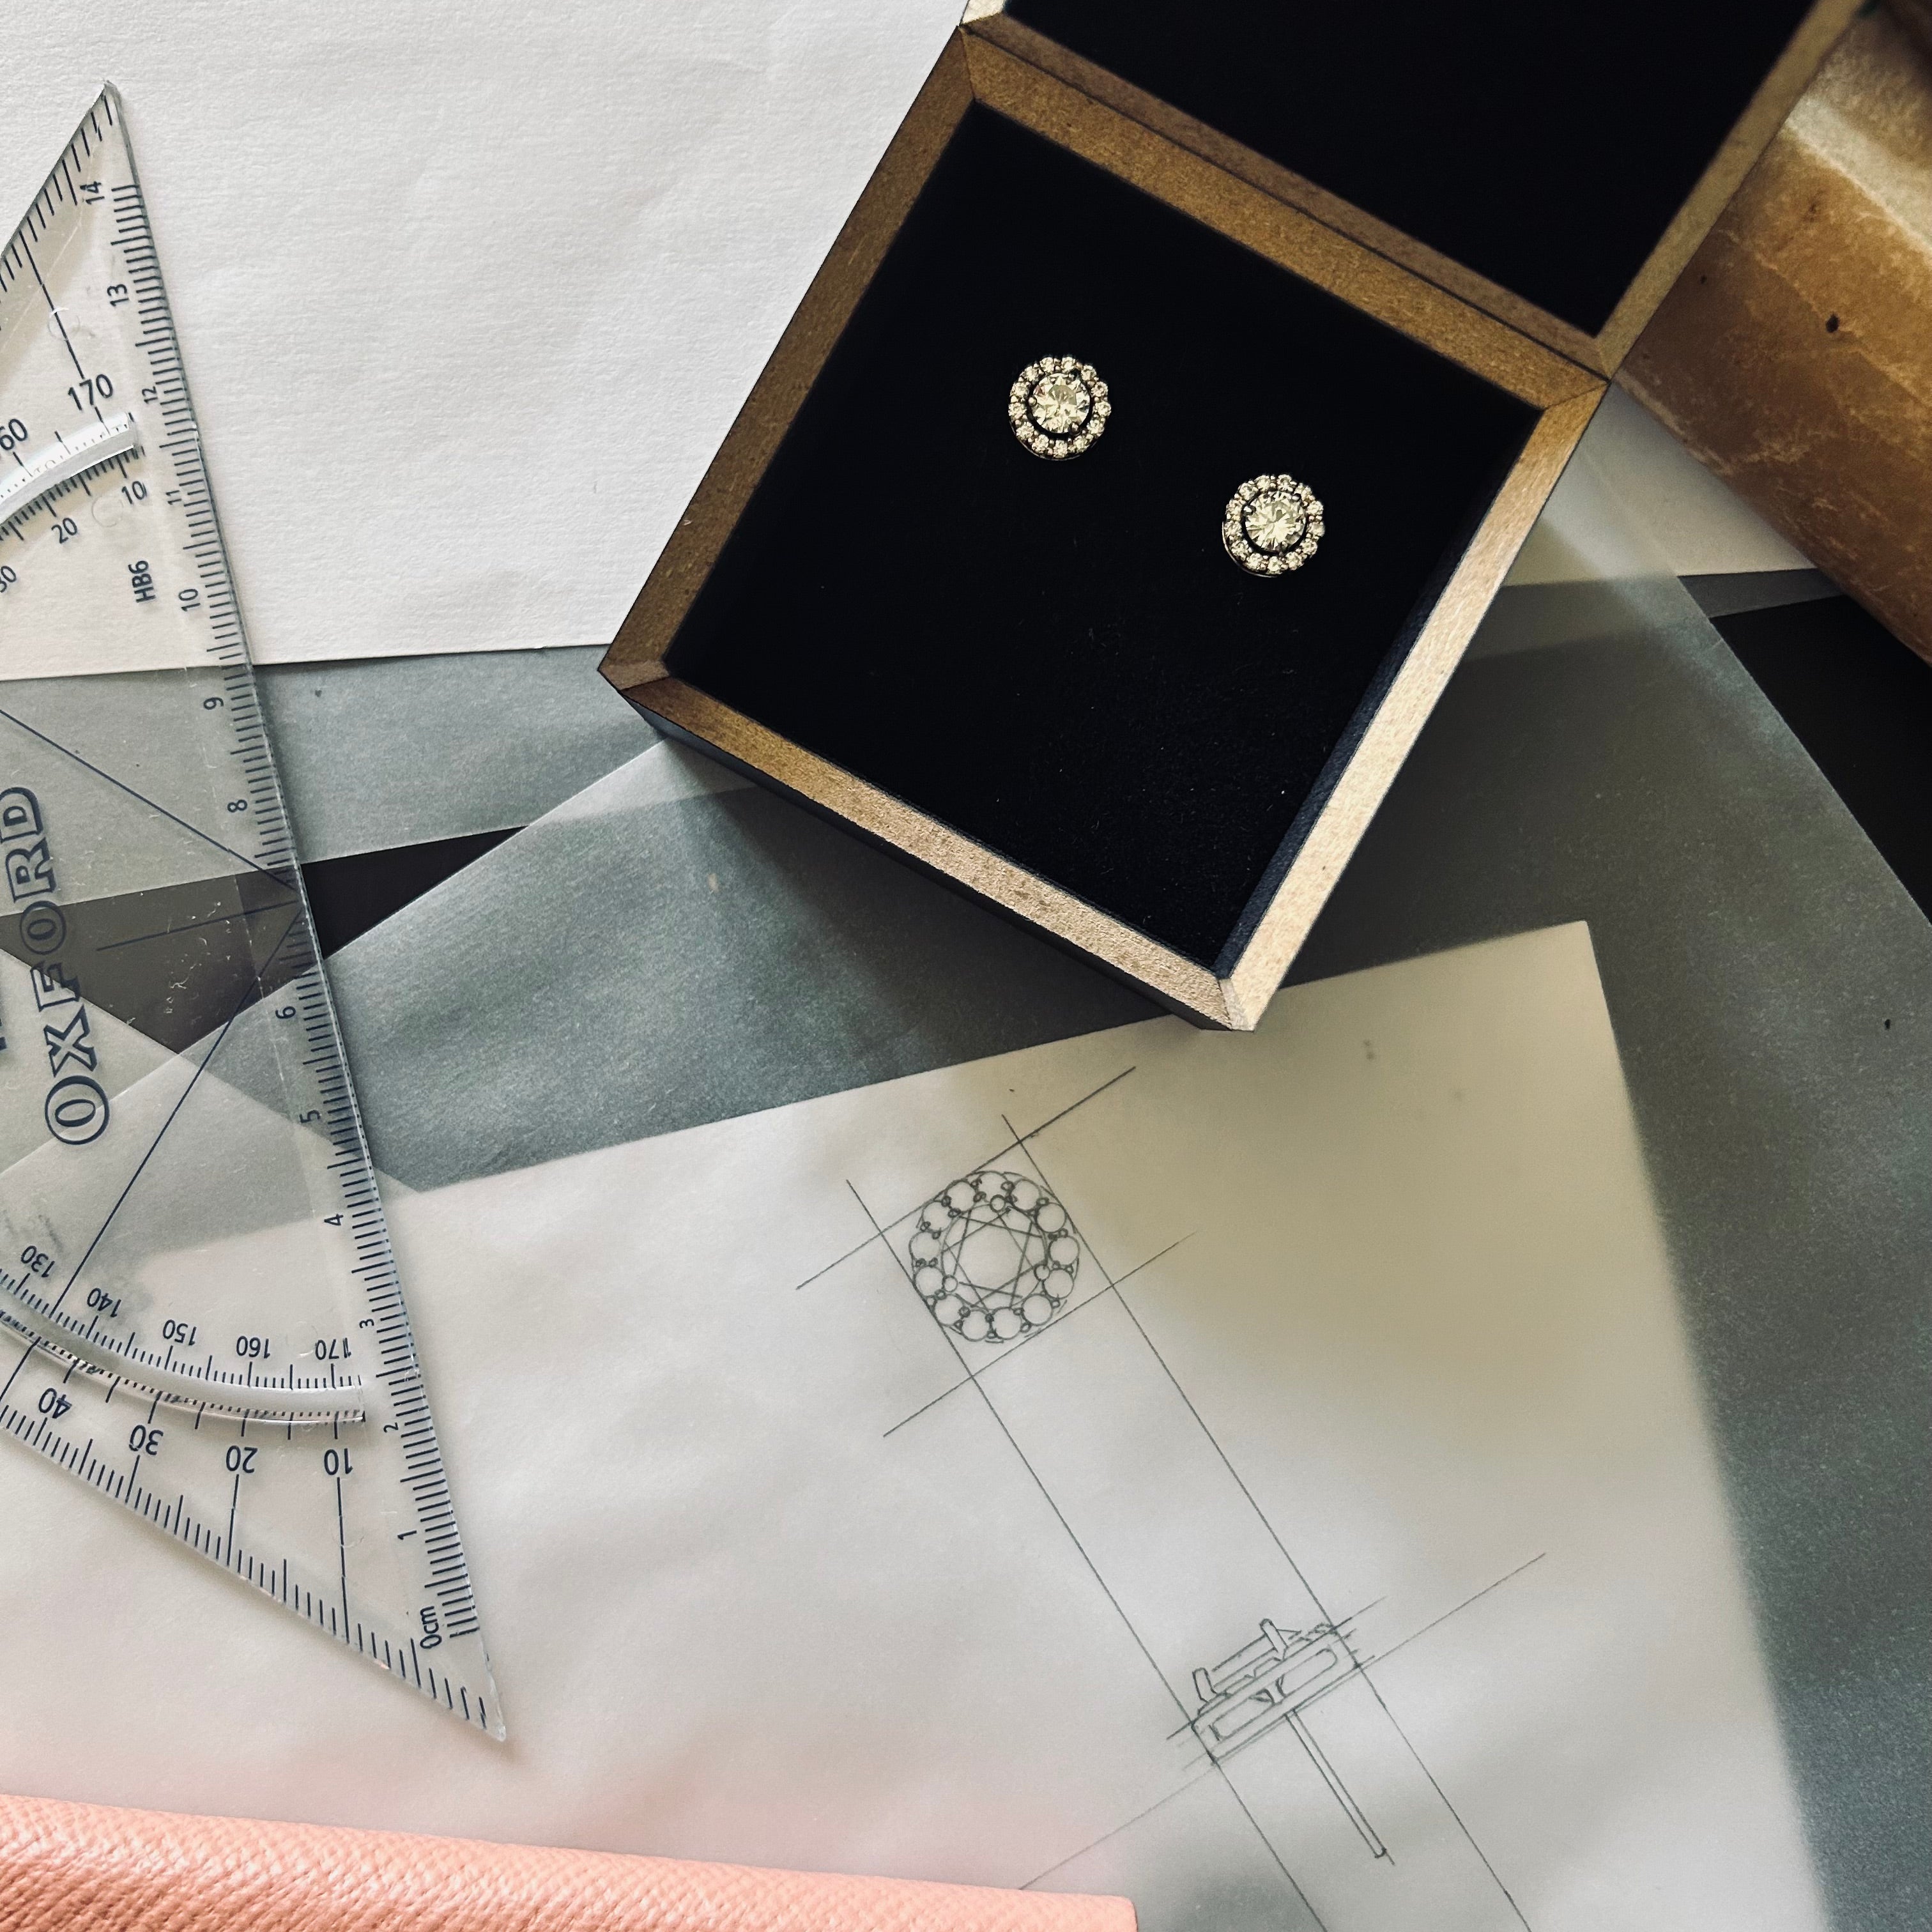 Pair of bespoke repurposed diamond halo studs in their black presentation box on top of the original sketches 